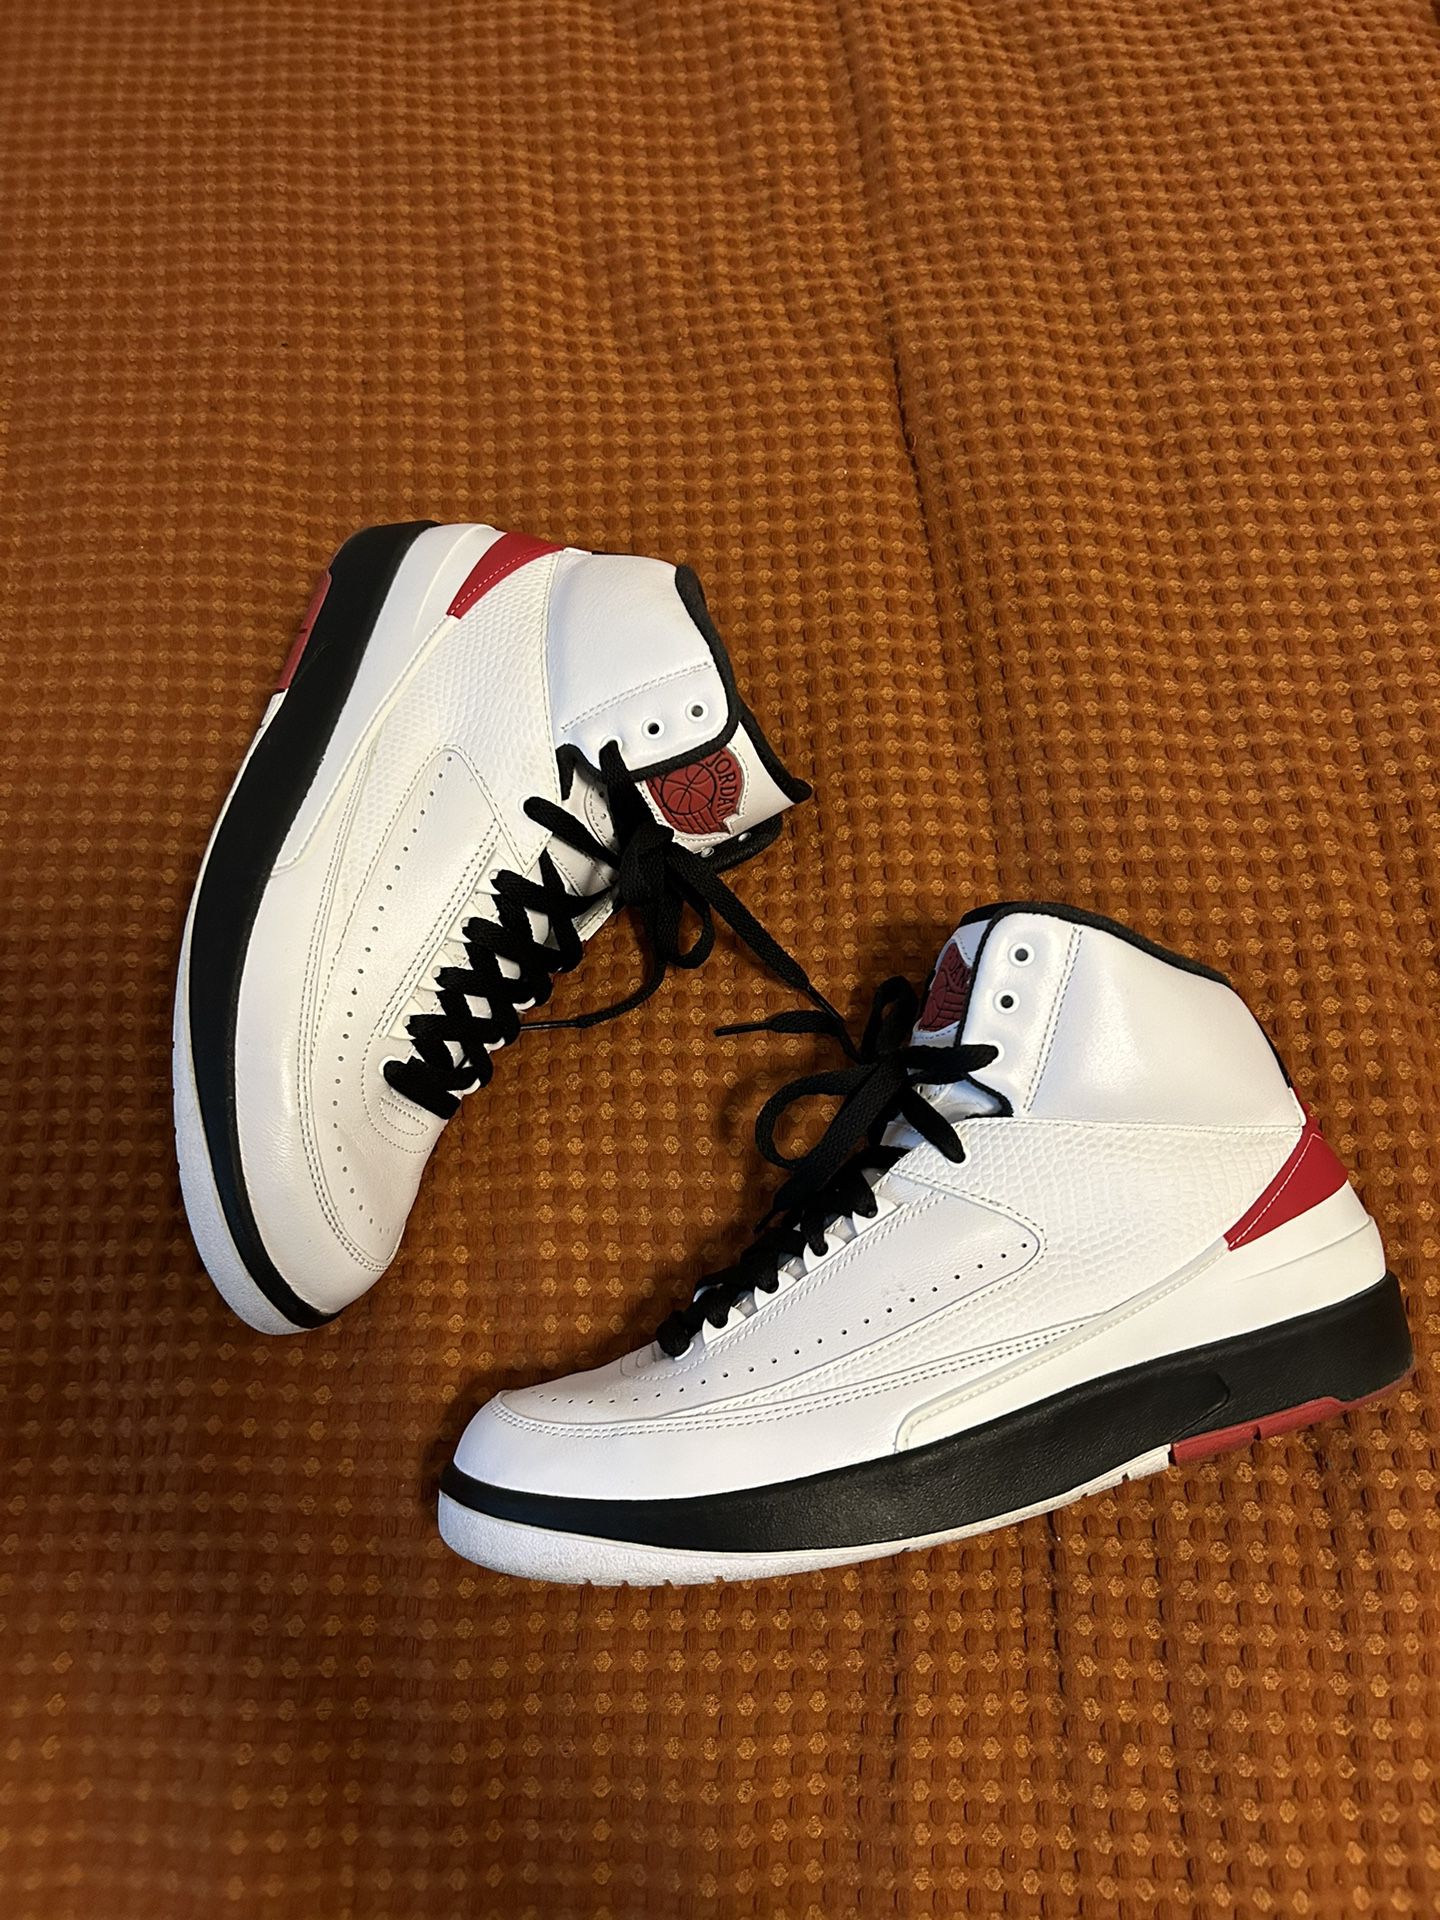 Retro Jordan 2s Chicago Size 10